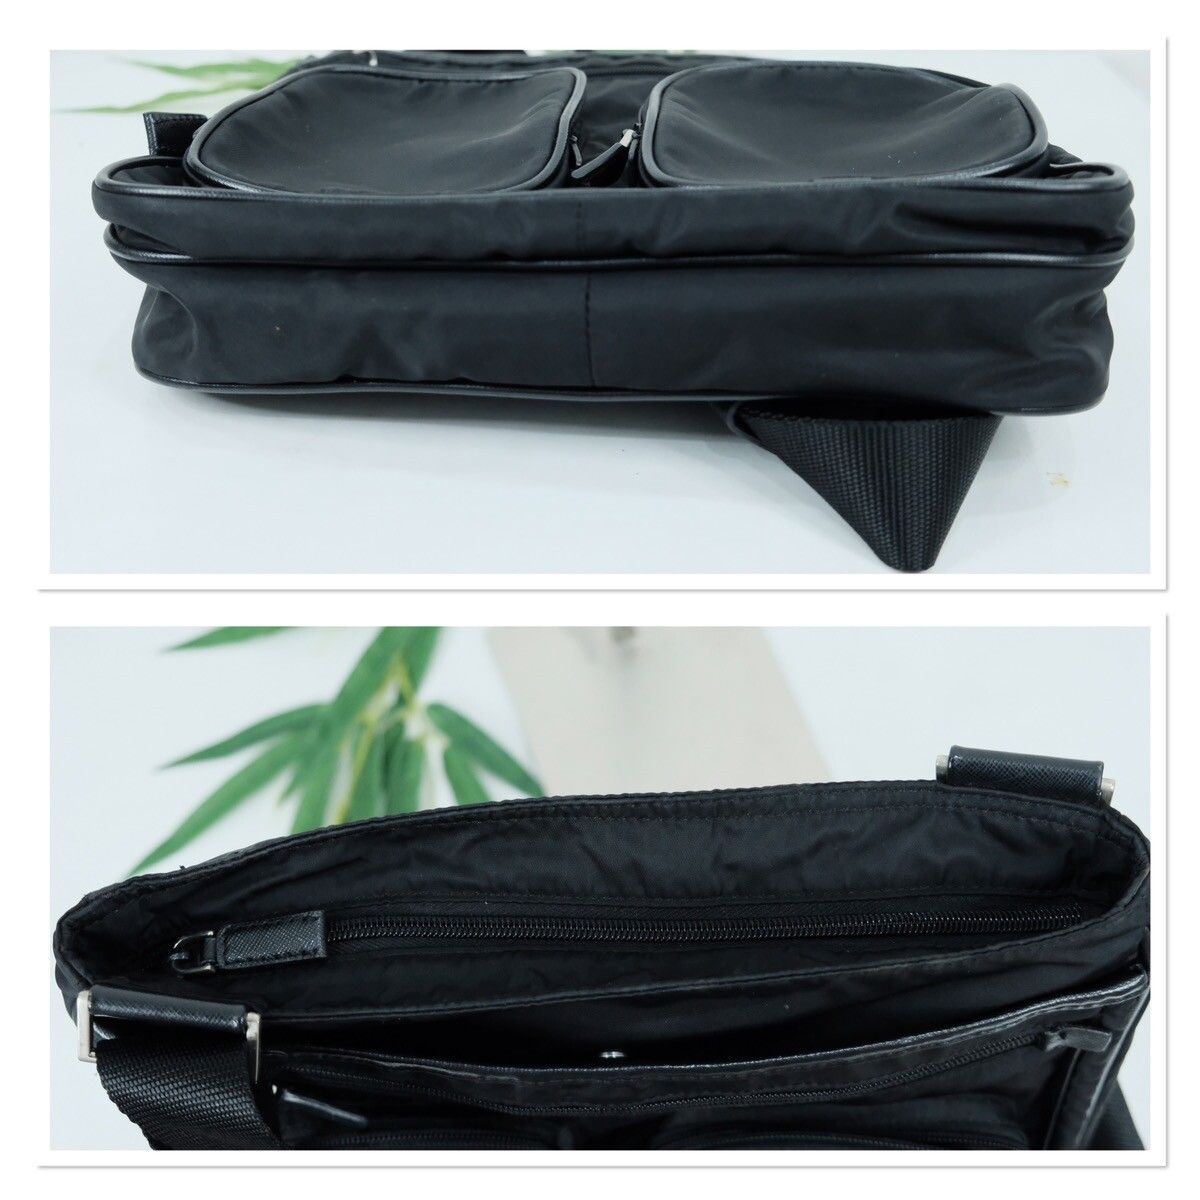 Authentic prada sling bag black nylon - 7